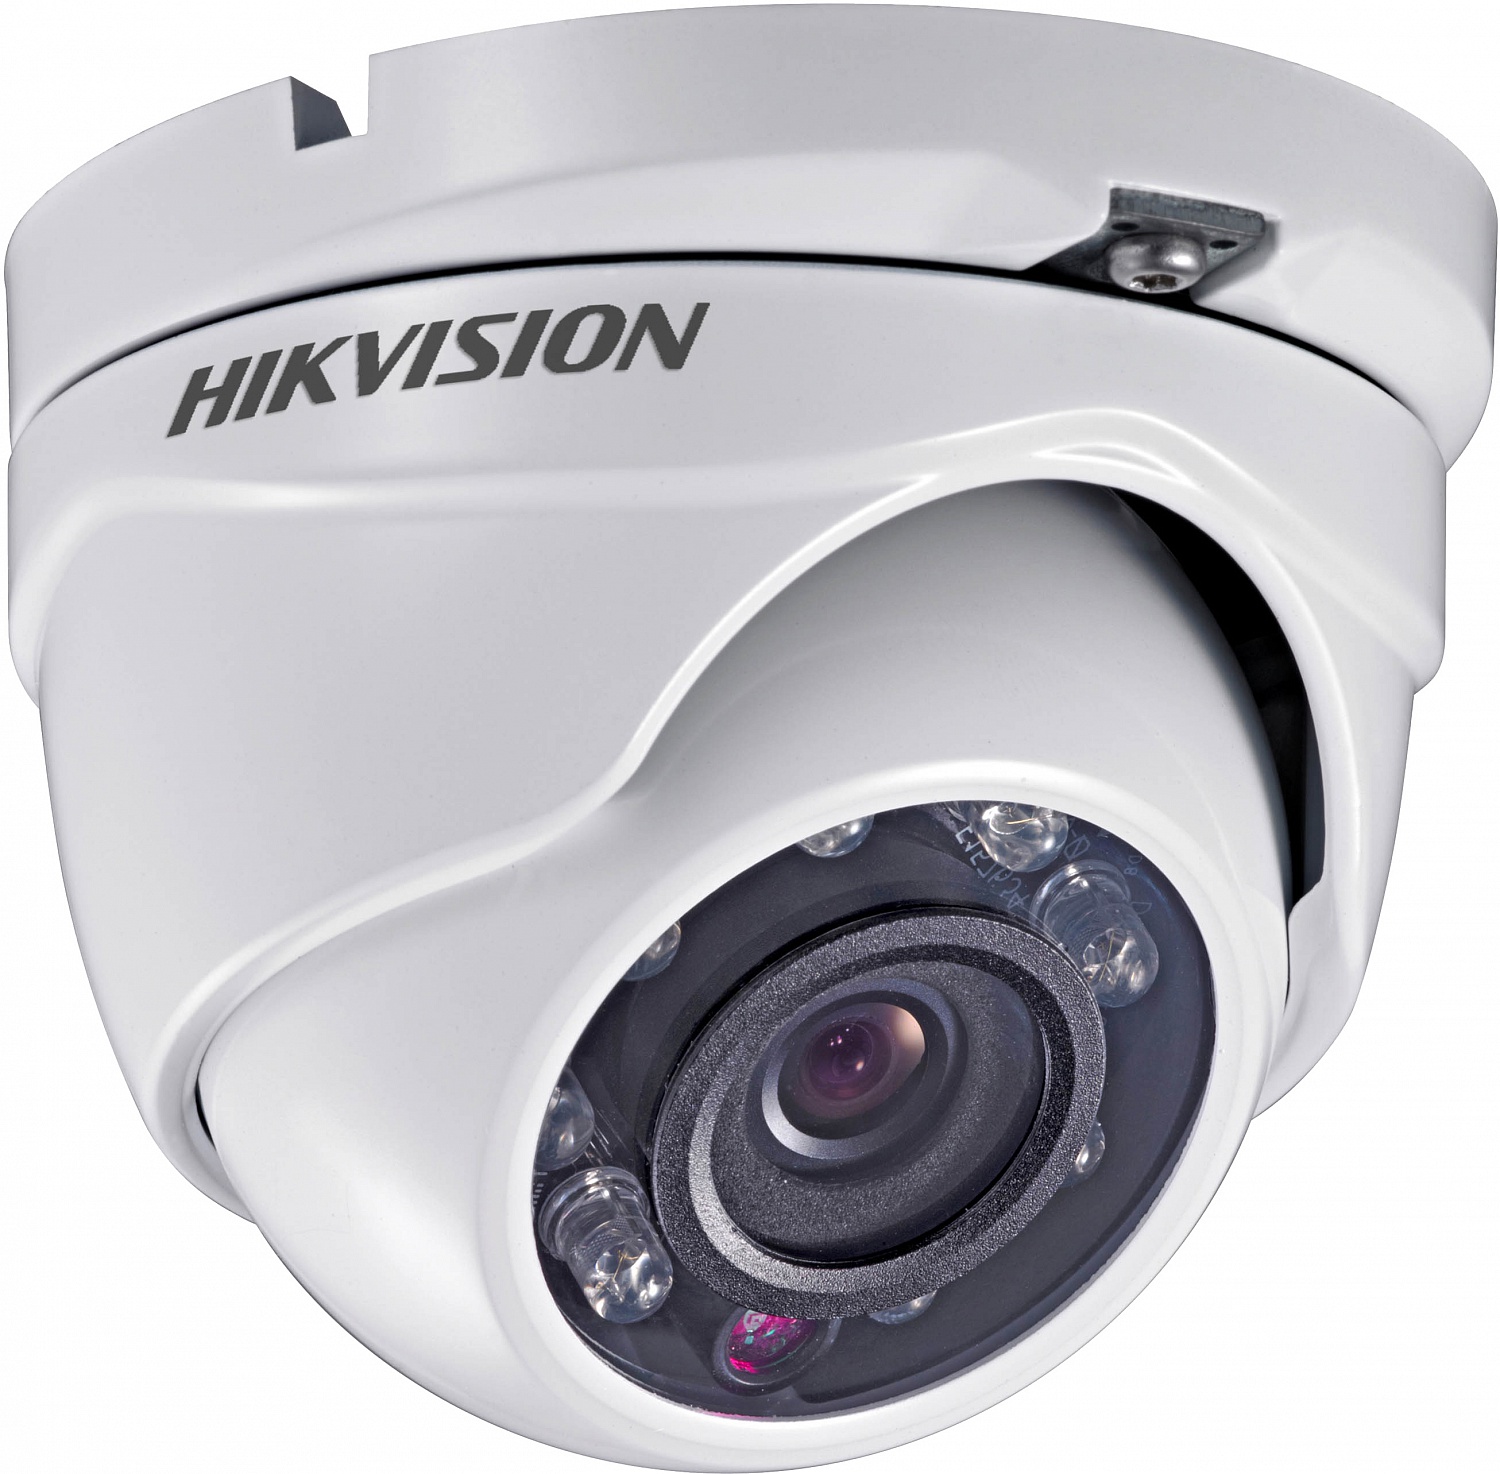 Turbo HD камера Hikvision DS-2CE56D0T-IRMF (2.8 мм)